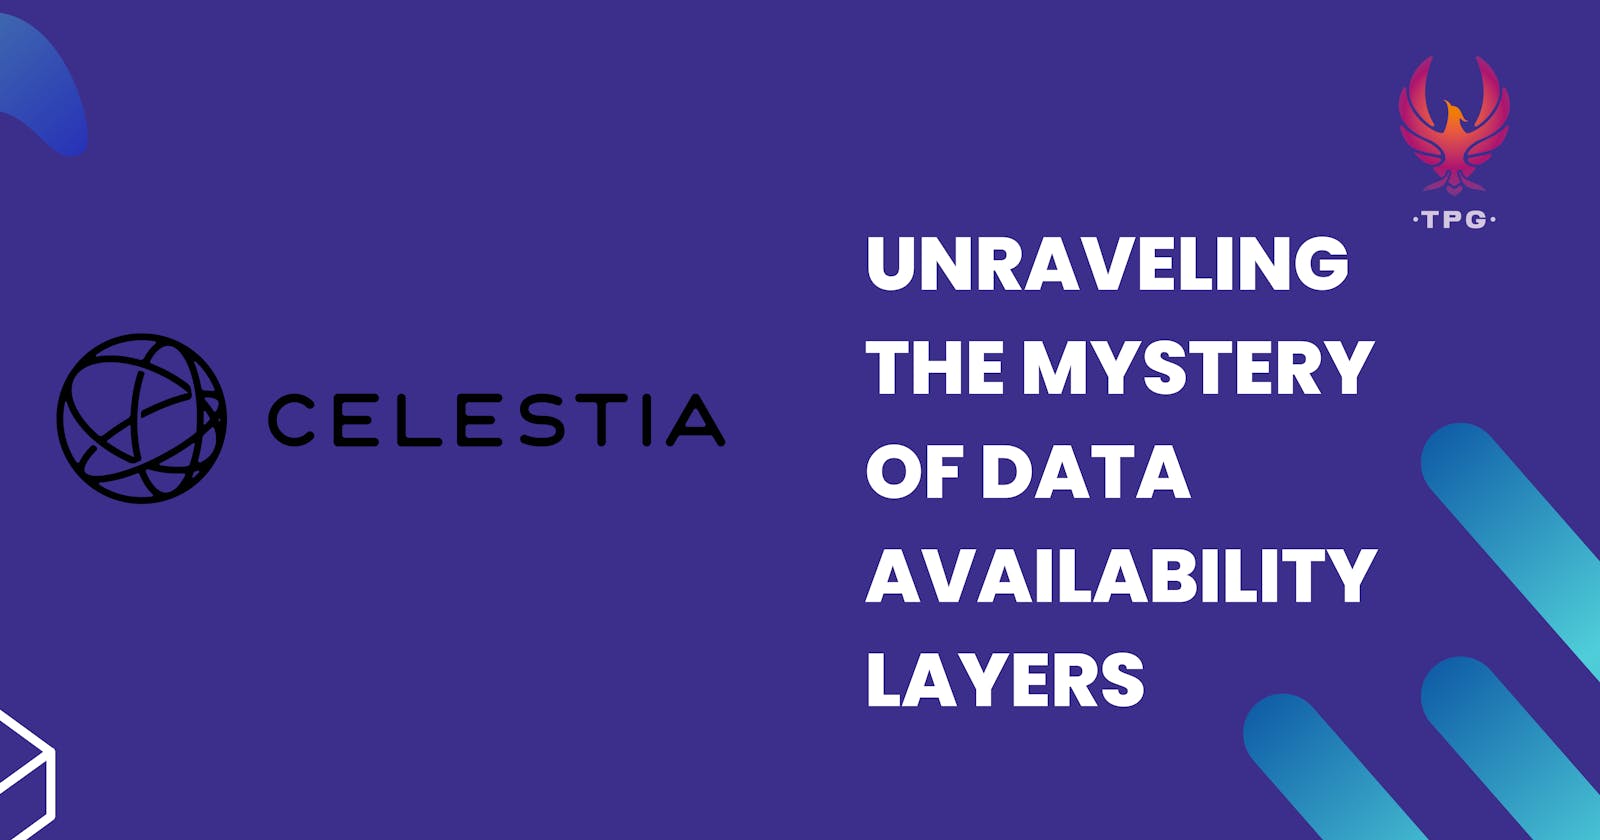 Celestia's Revolutionary Role in Blockchain Data Availability